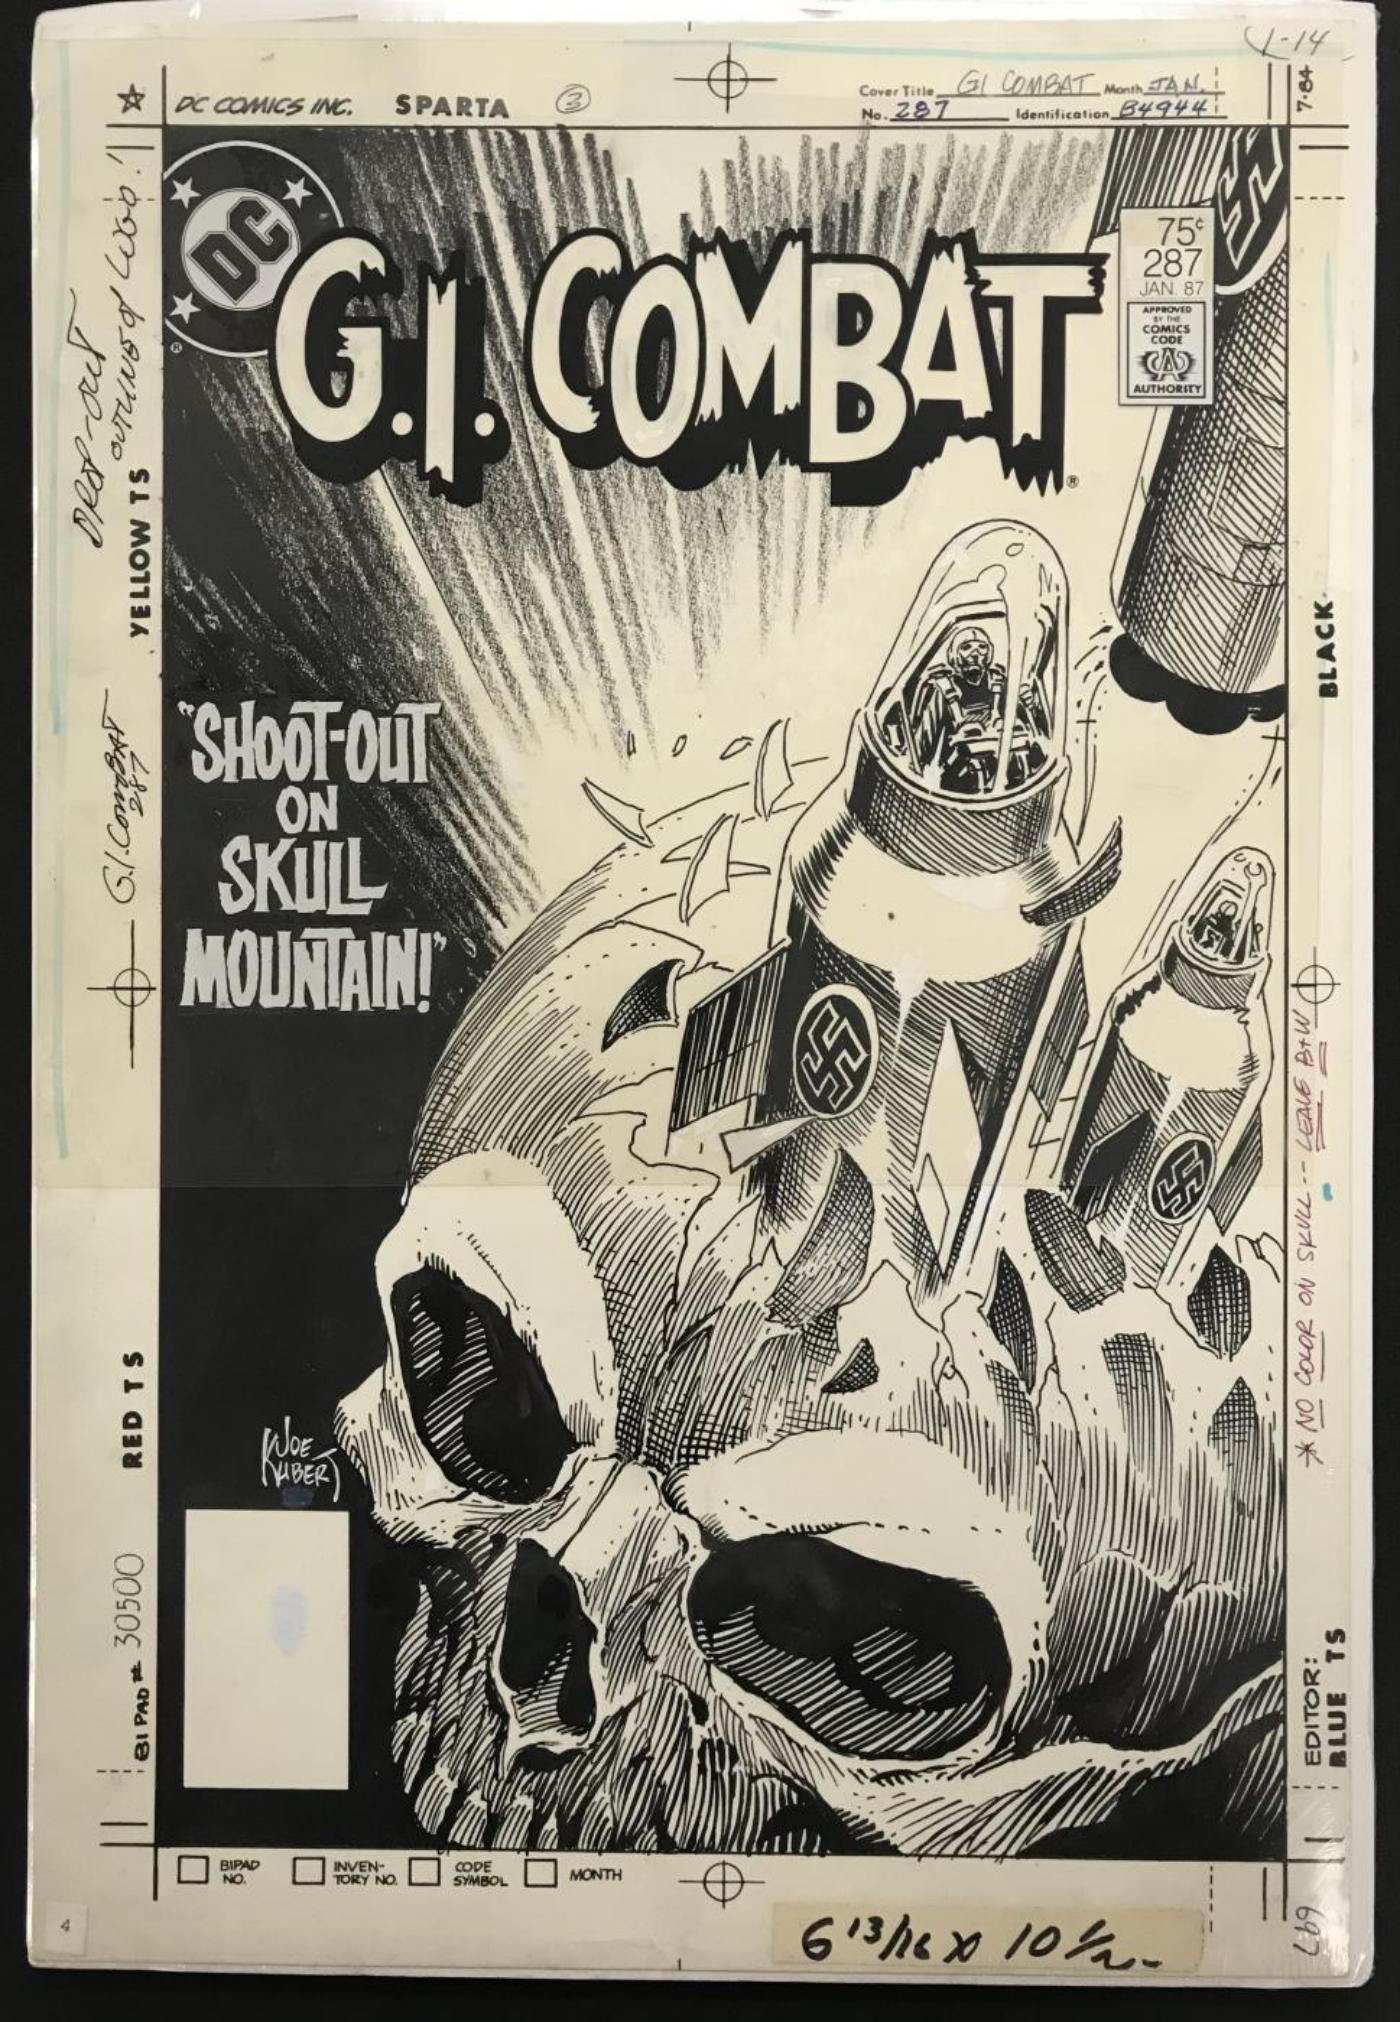 Joe Kubert. G. I. Combat #287 Original Cover.